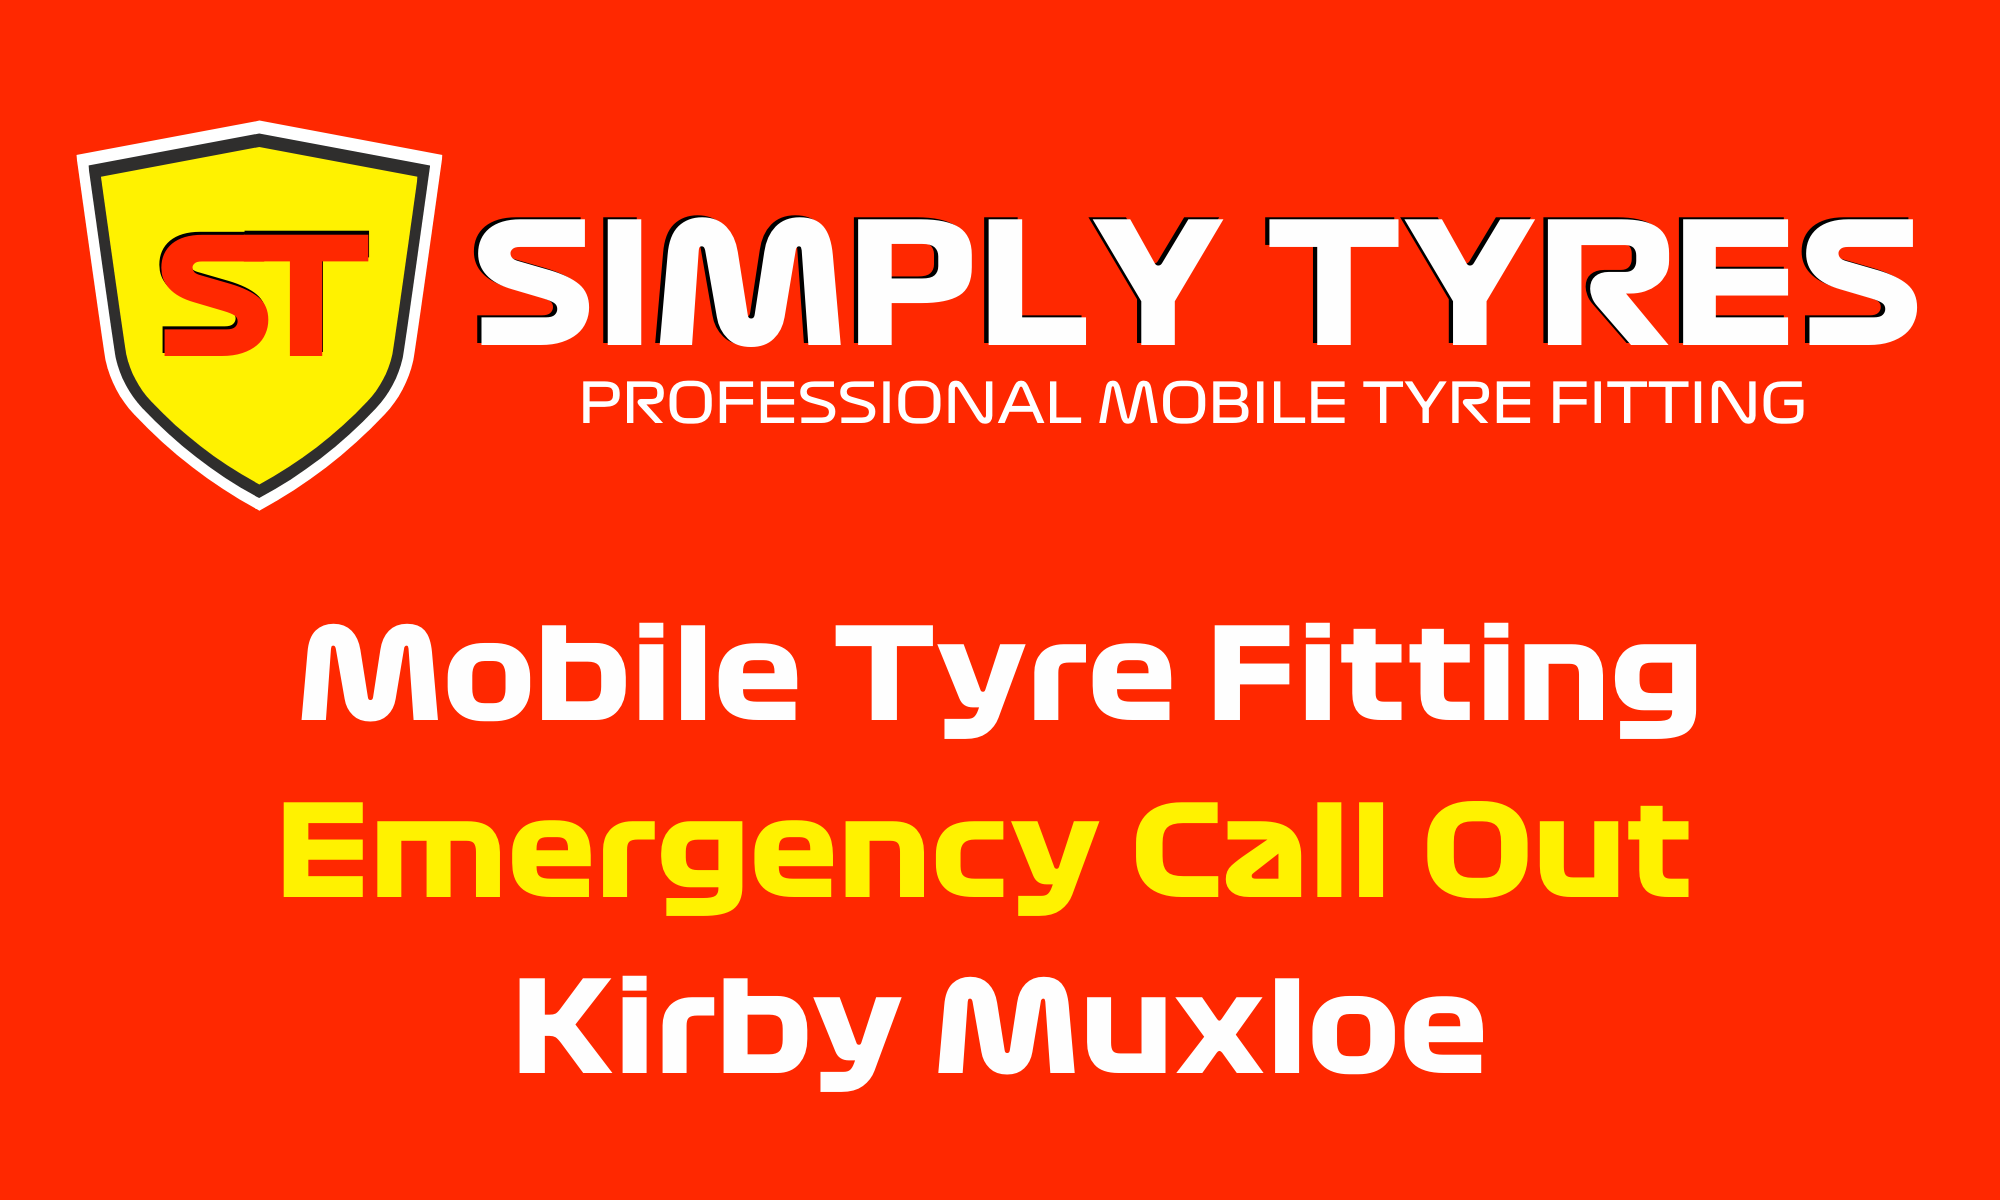 Mobile Tyre Fitting Kirby Muxloe | 23rd June 2021